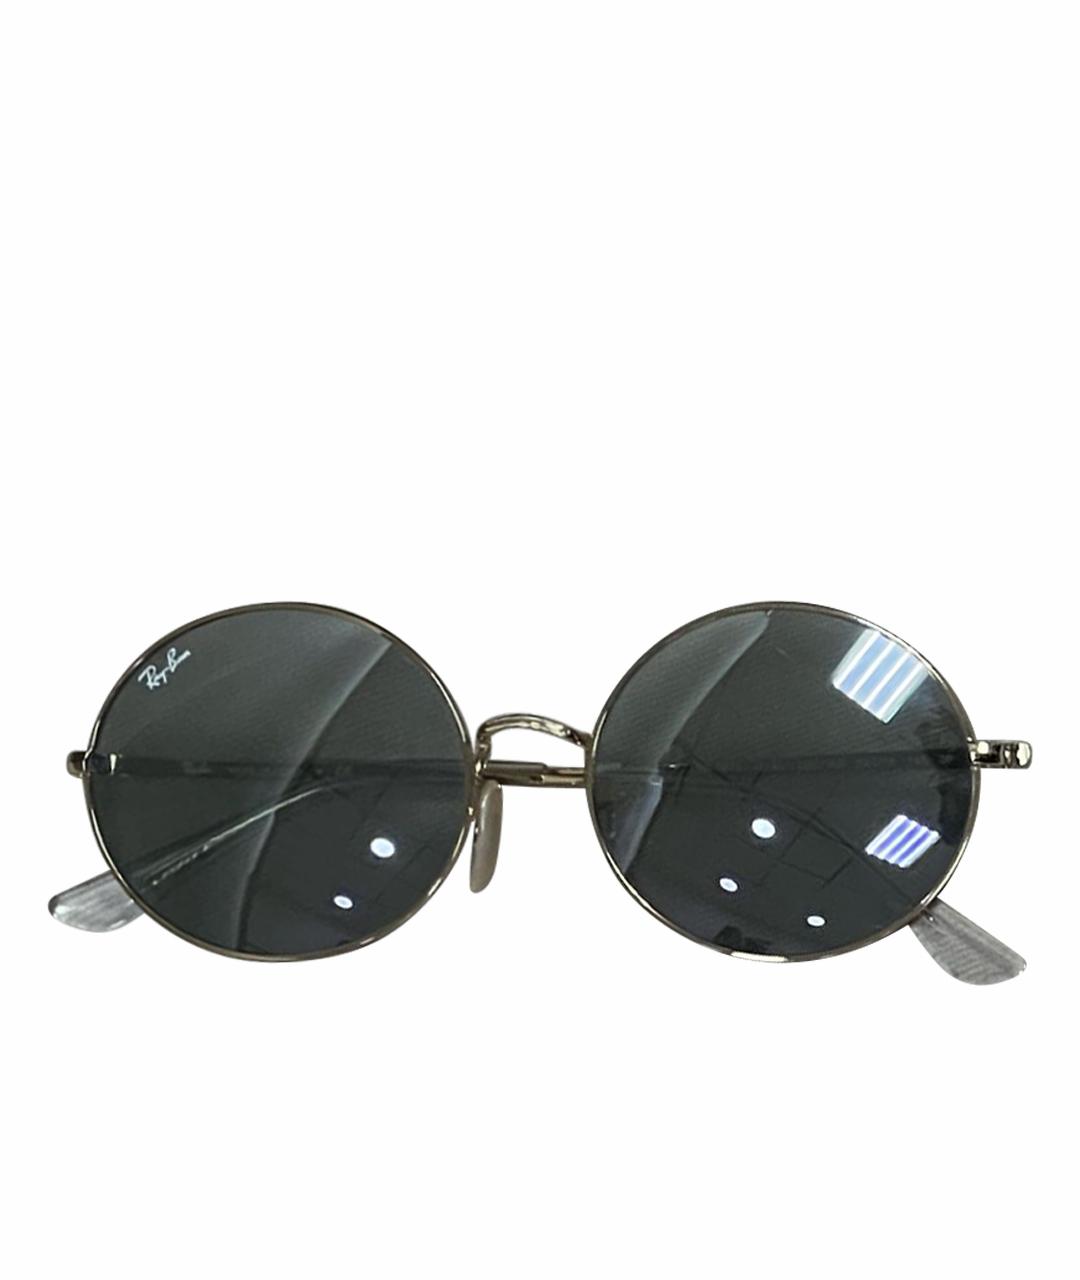 RAY BAN Металлические солнцезащитные очки, фото 1